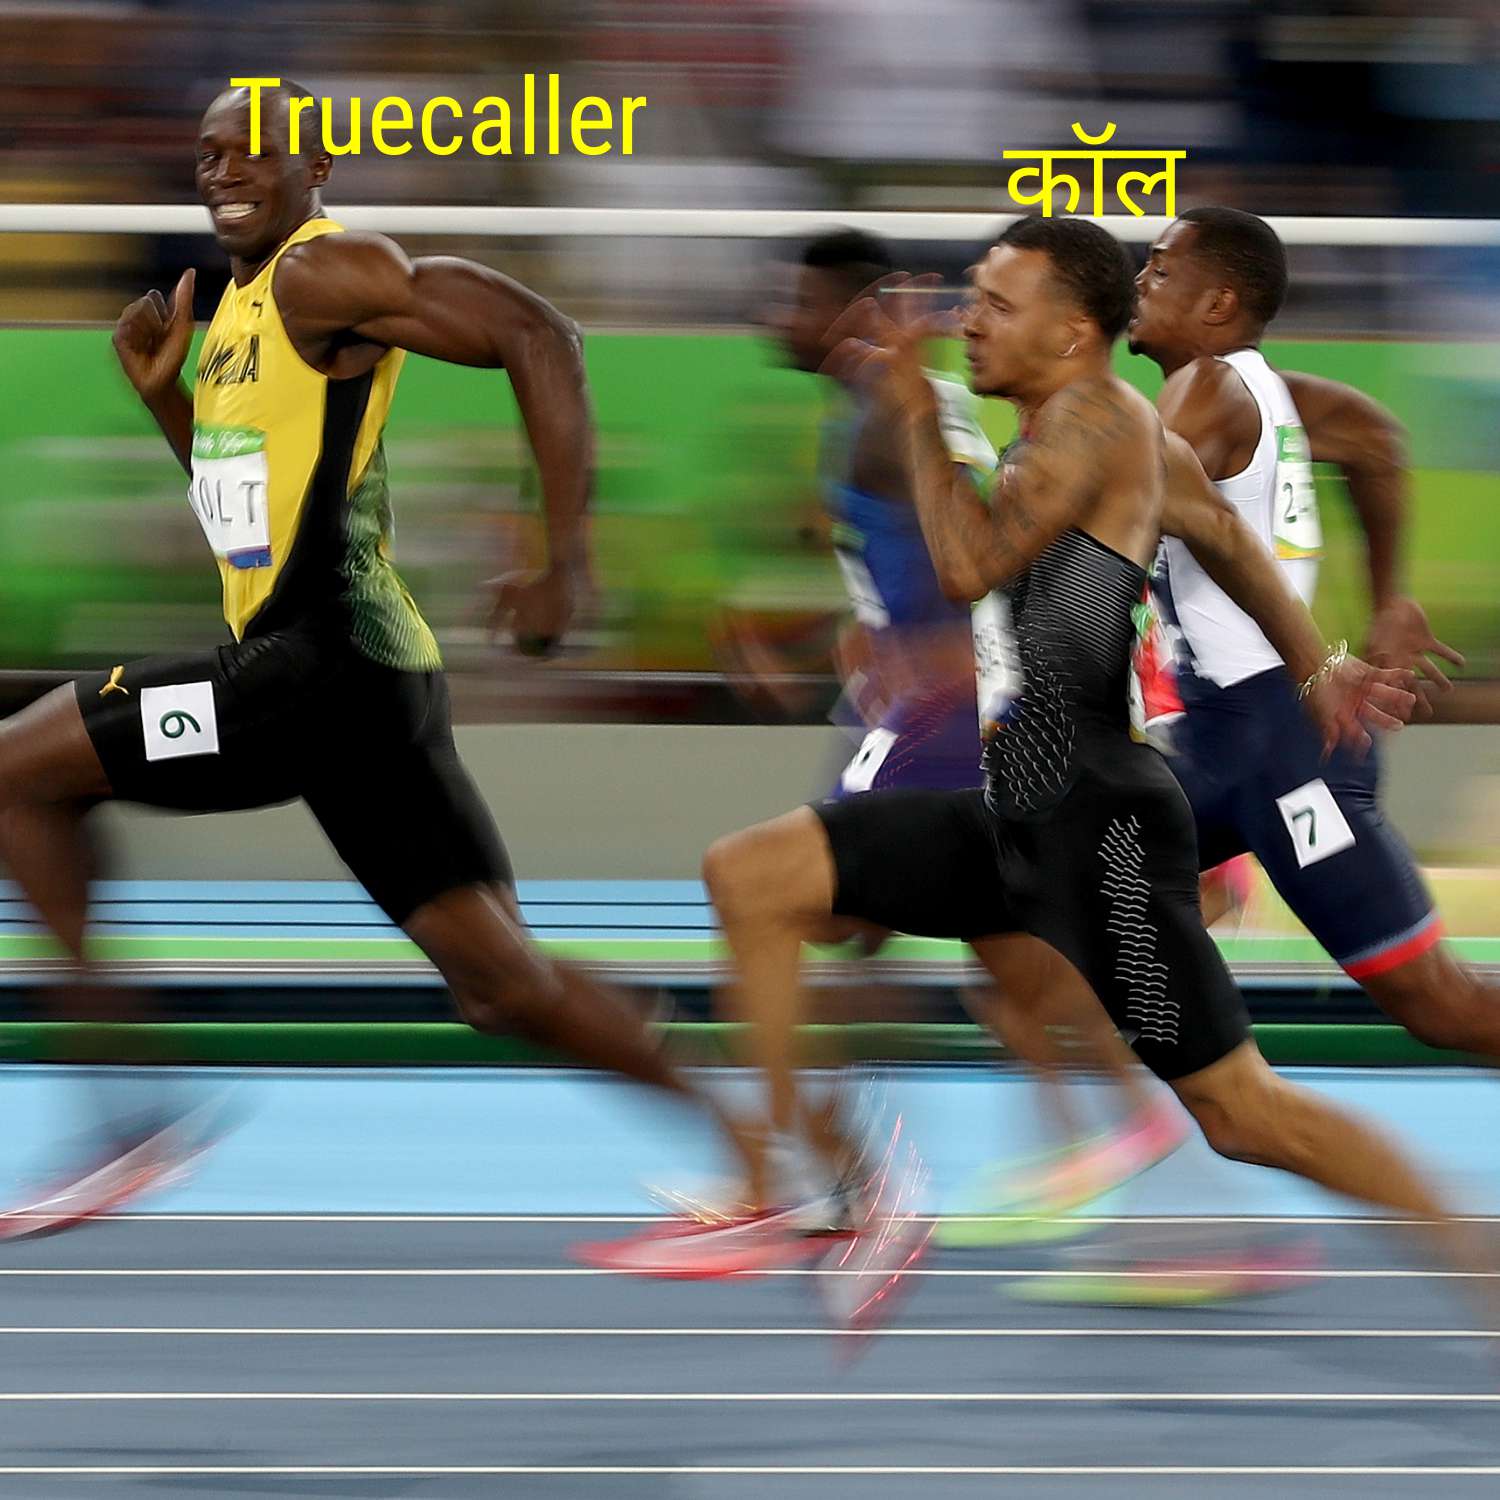 Truecaller Vs Incoming Call meme